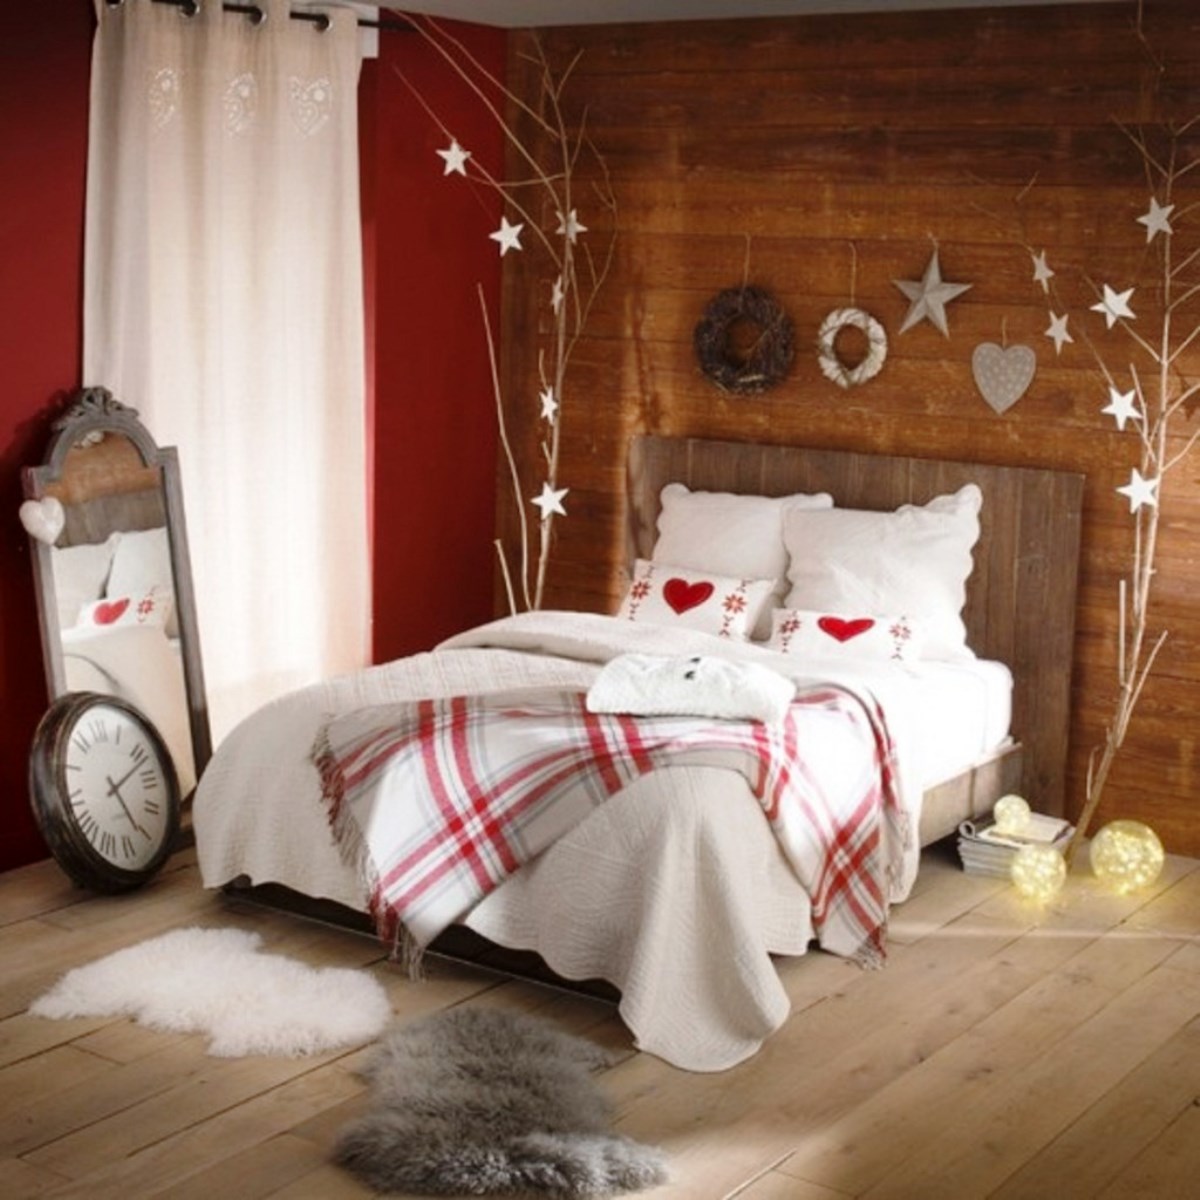 Christmas Bedroom Decor Ideas